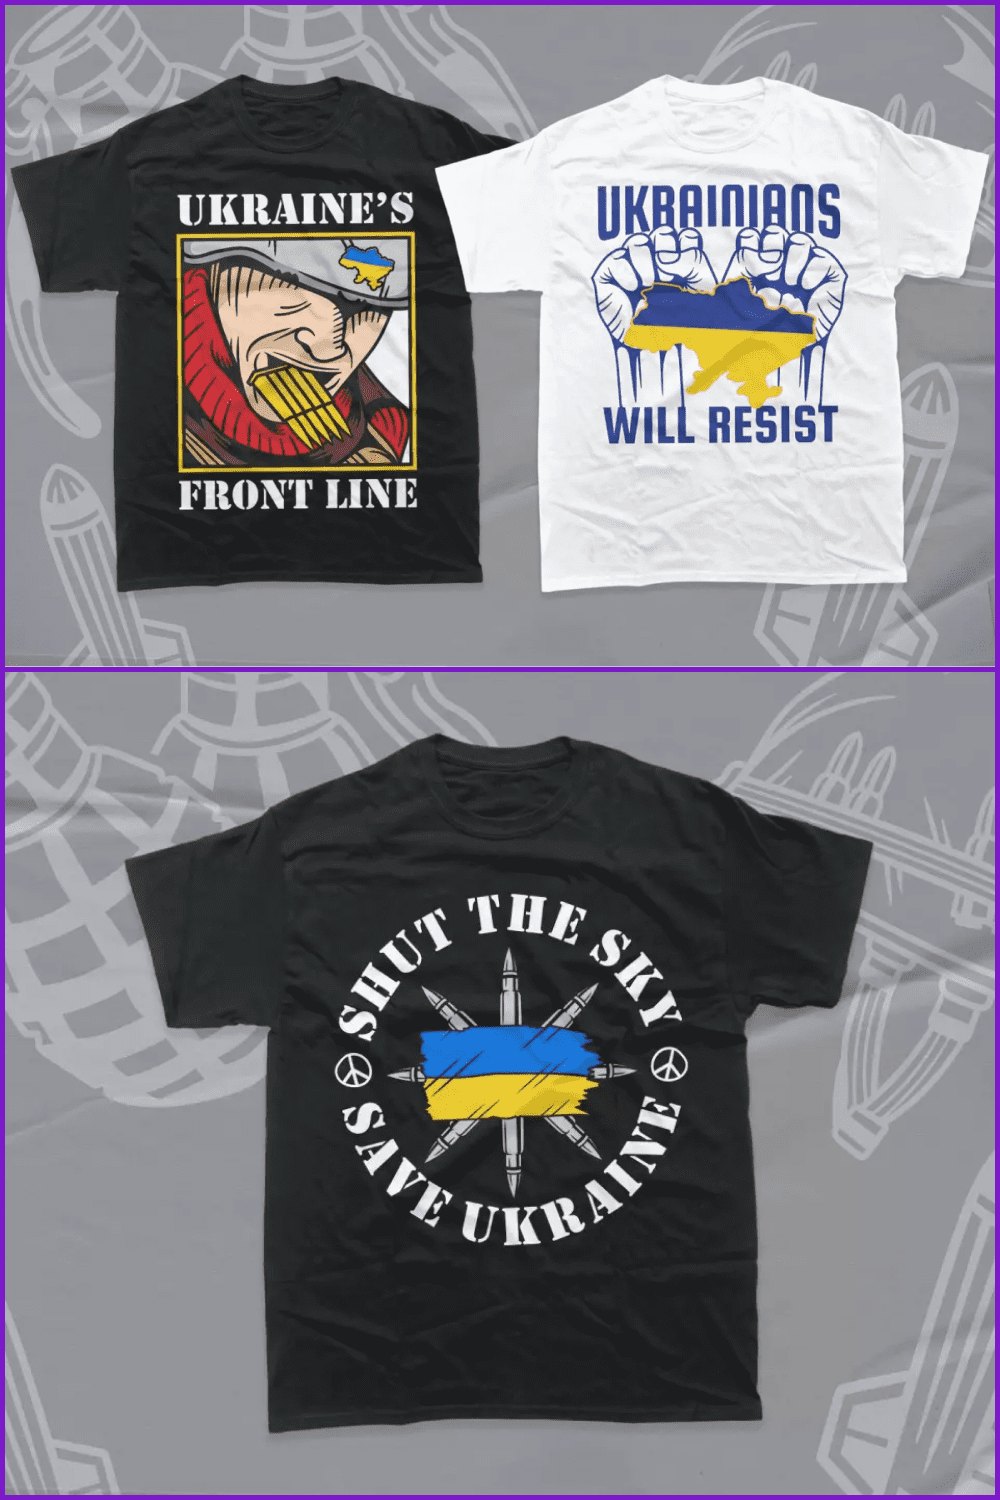 SAVE UKRAINE: 25 T-shirt Designs Bundle.